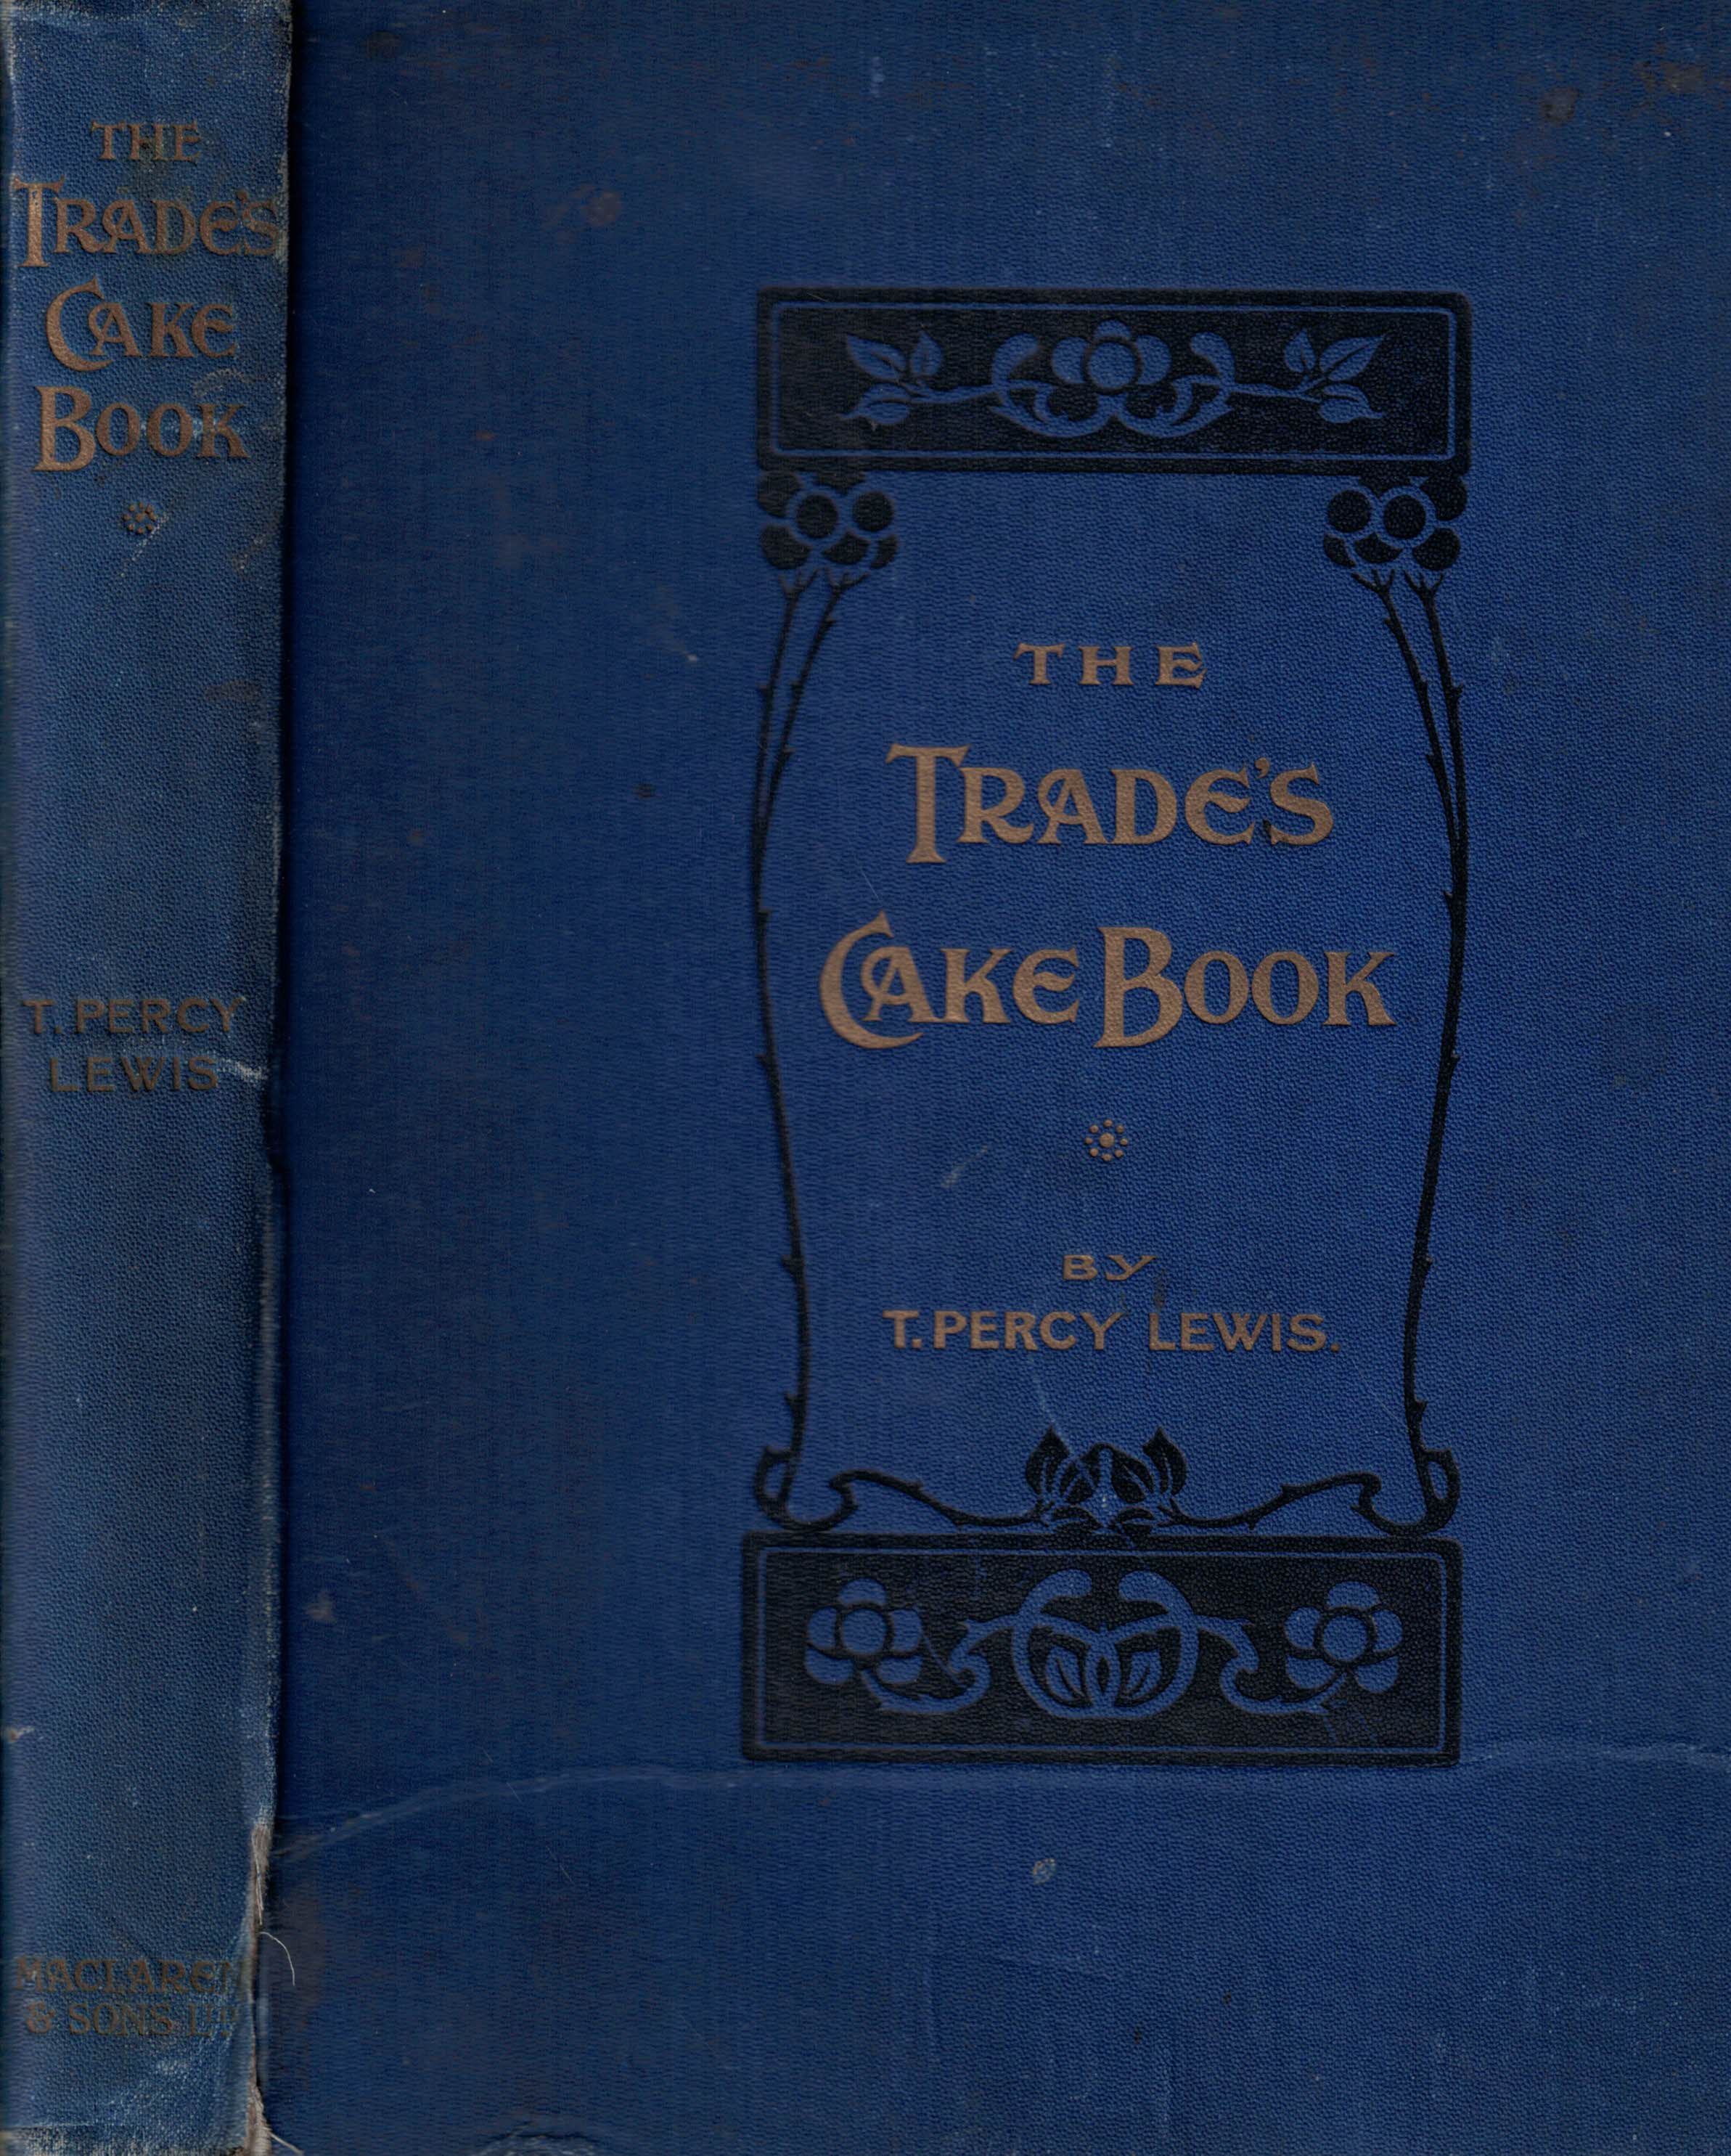 The Trade's Cake Book